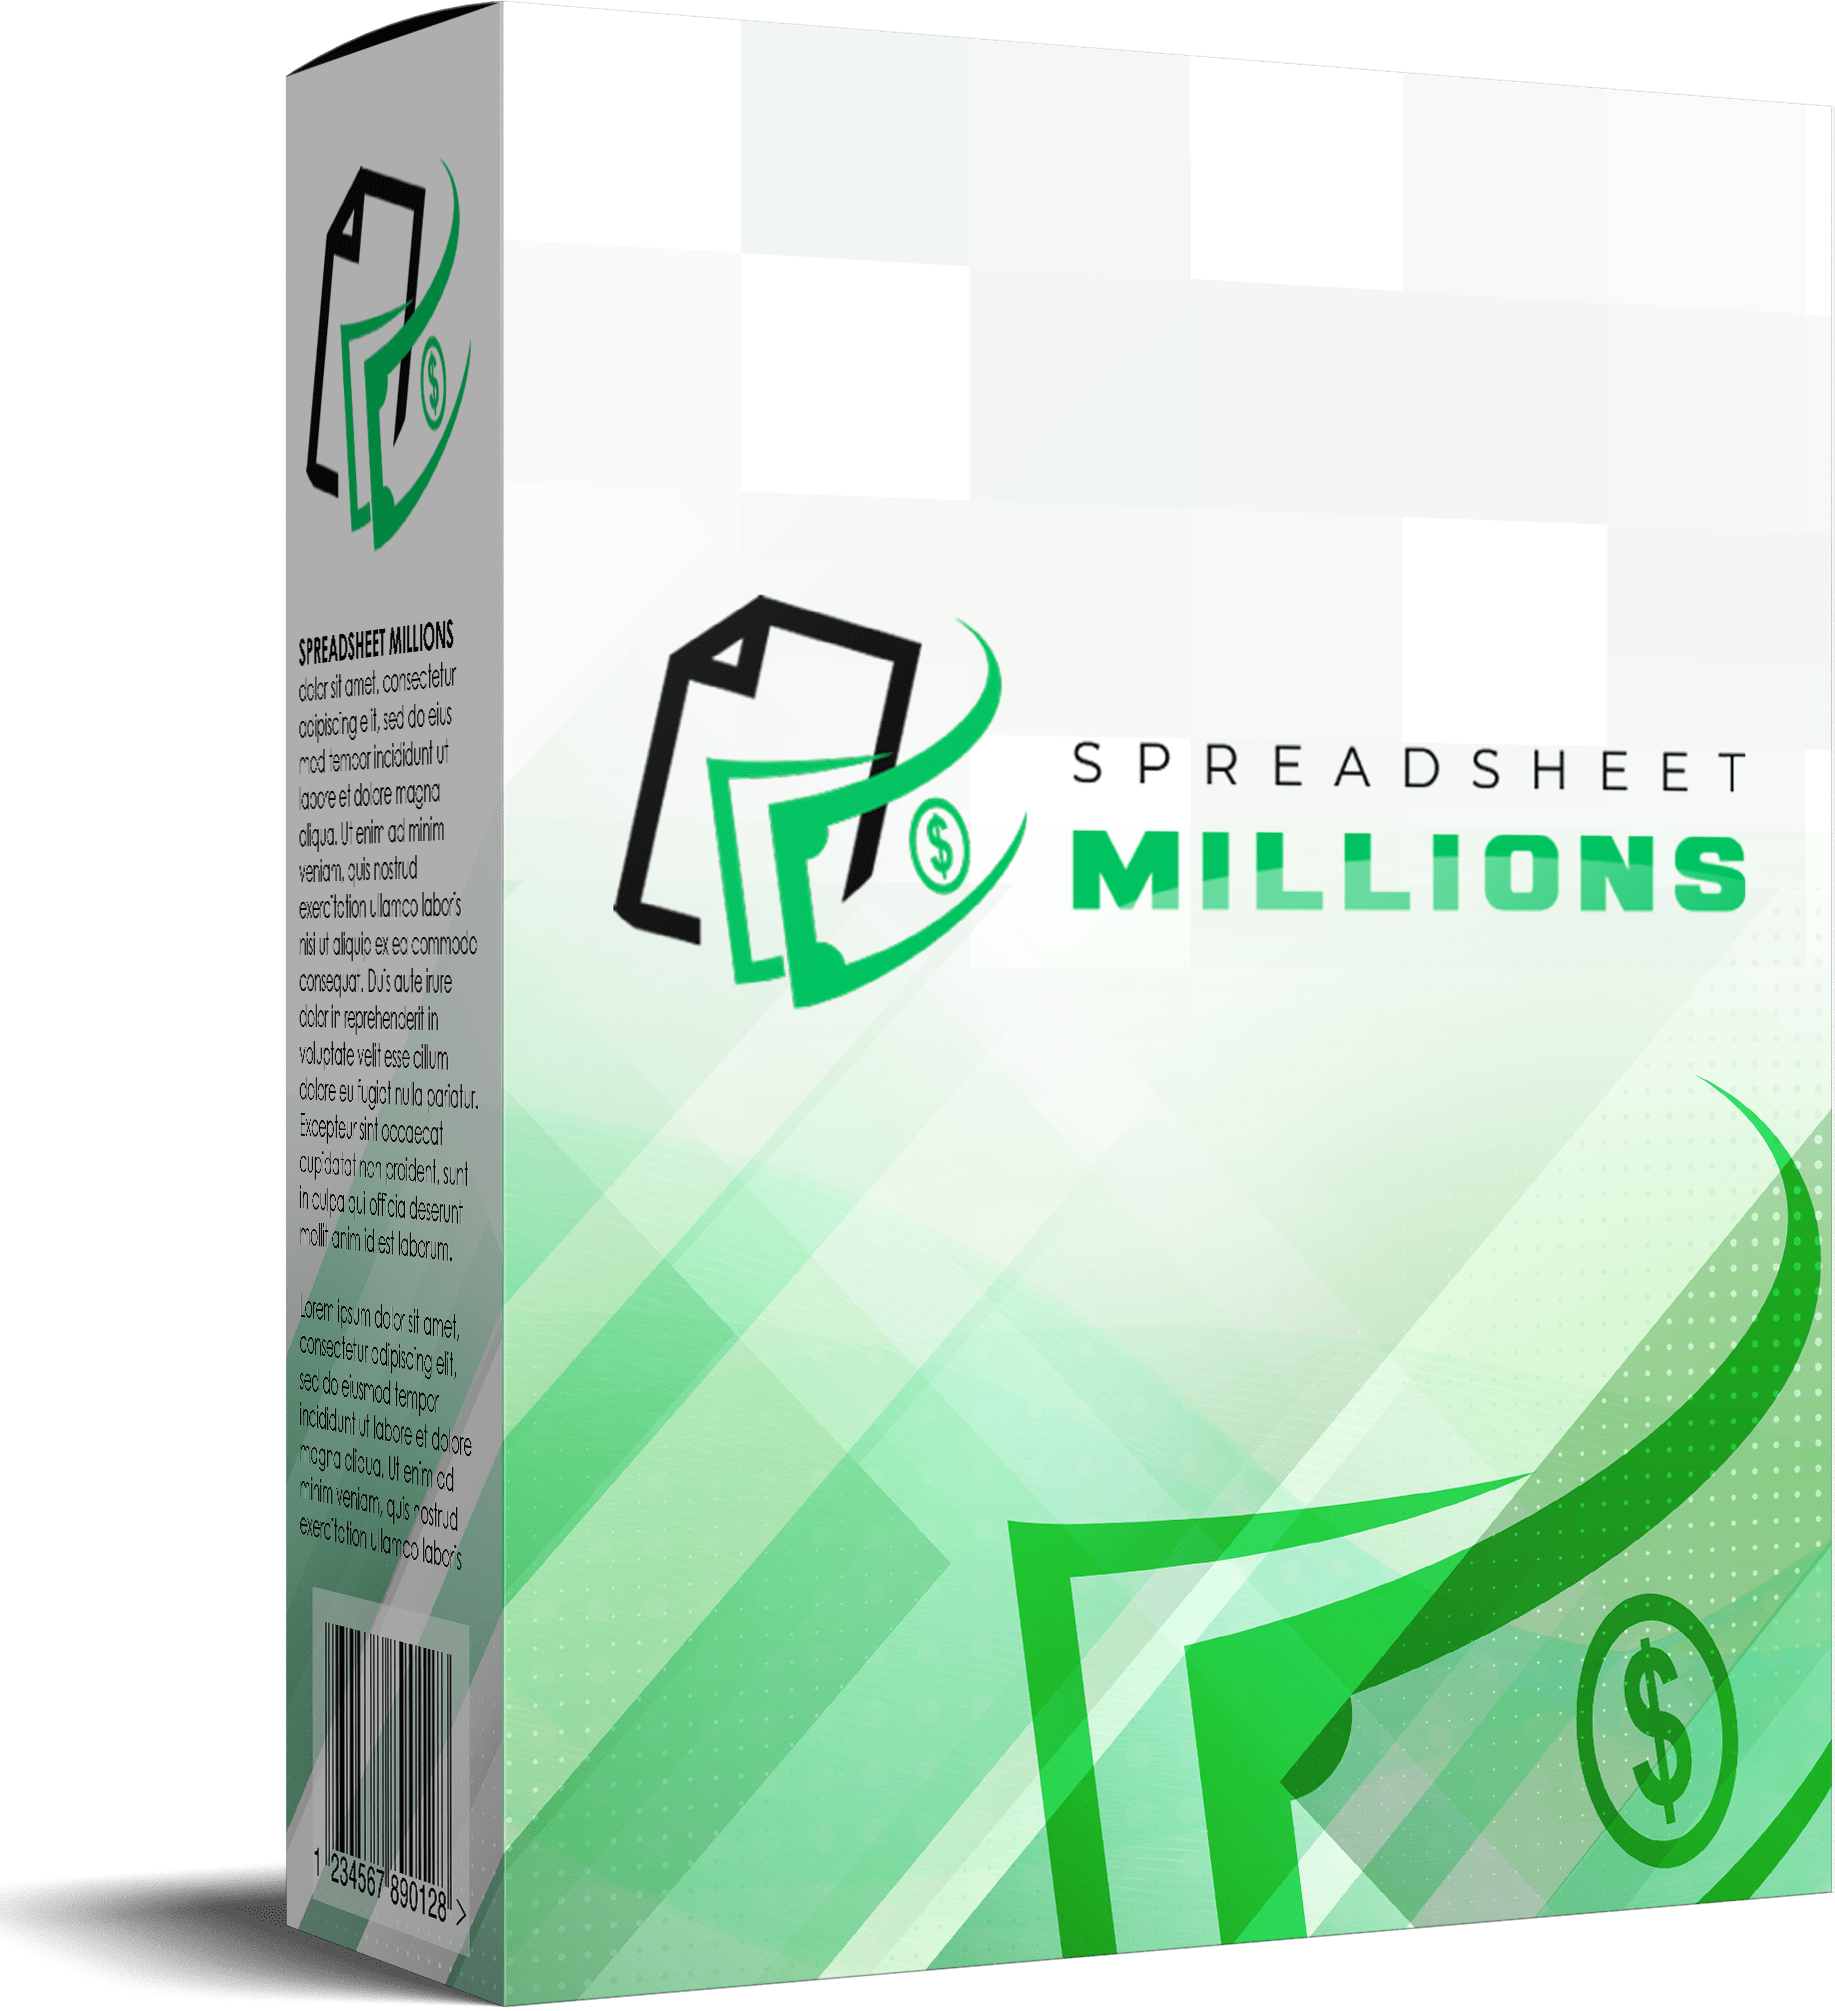 James Renouf – Spreadsheet Millions Download